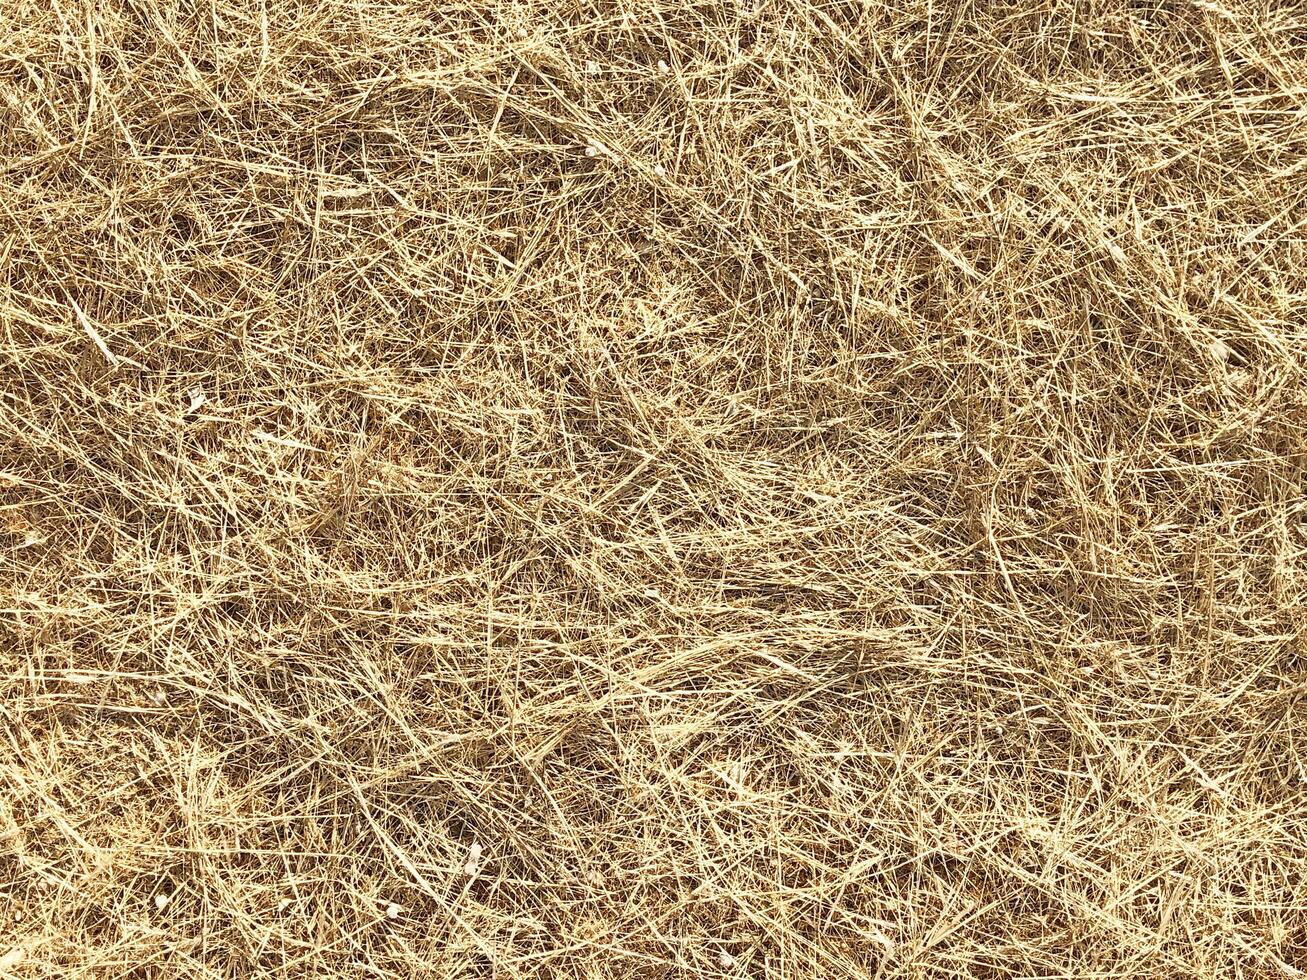 Outdoor straw texture photo